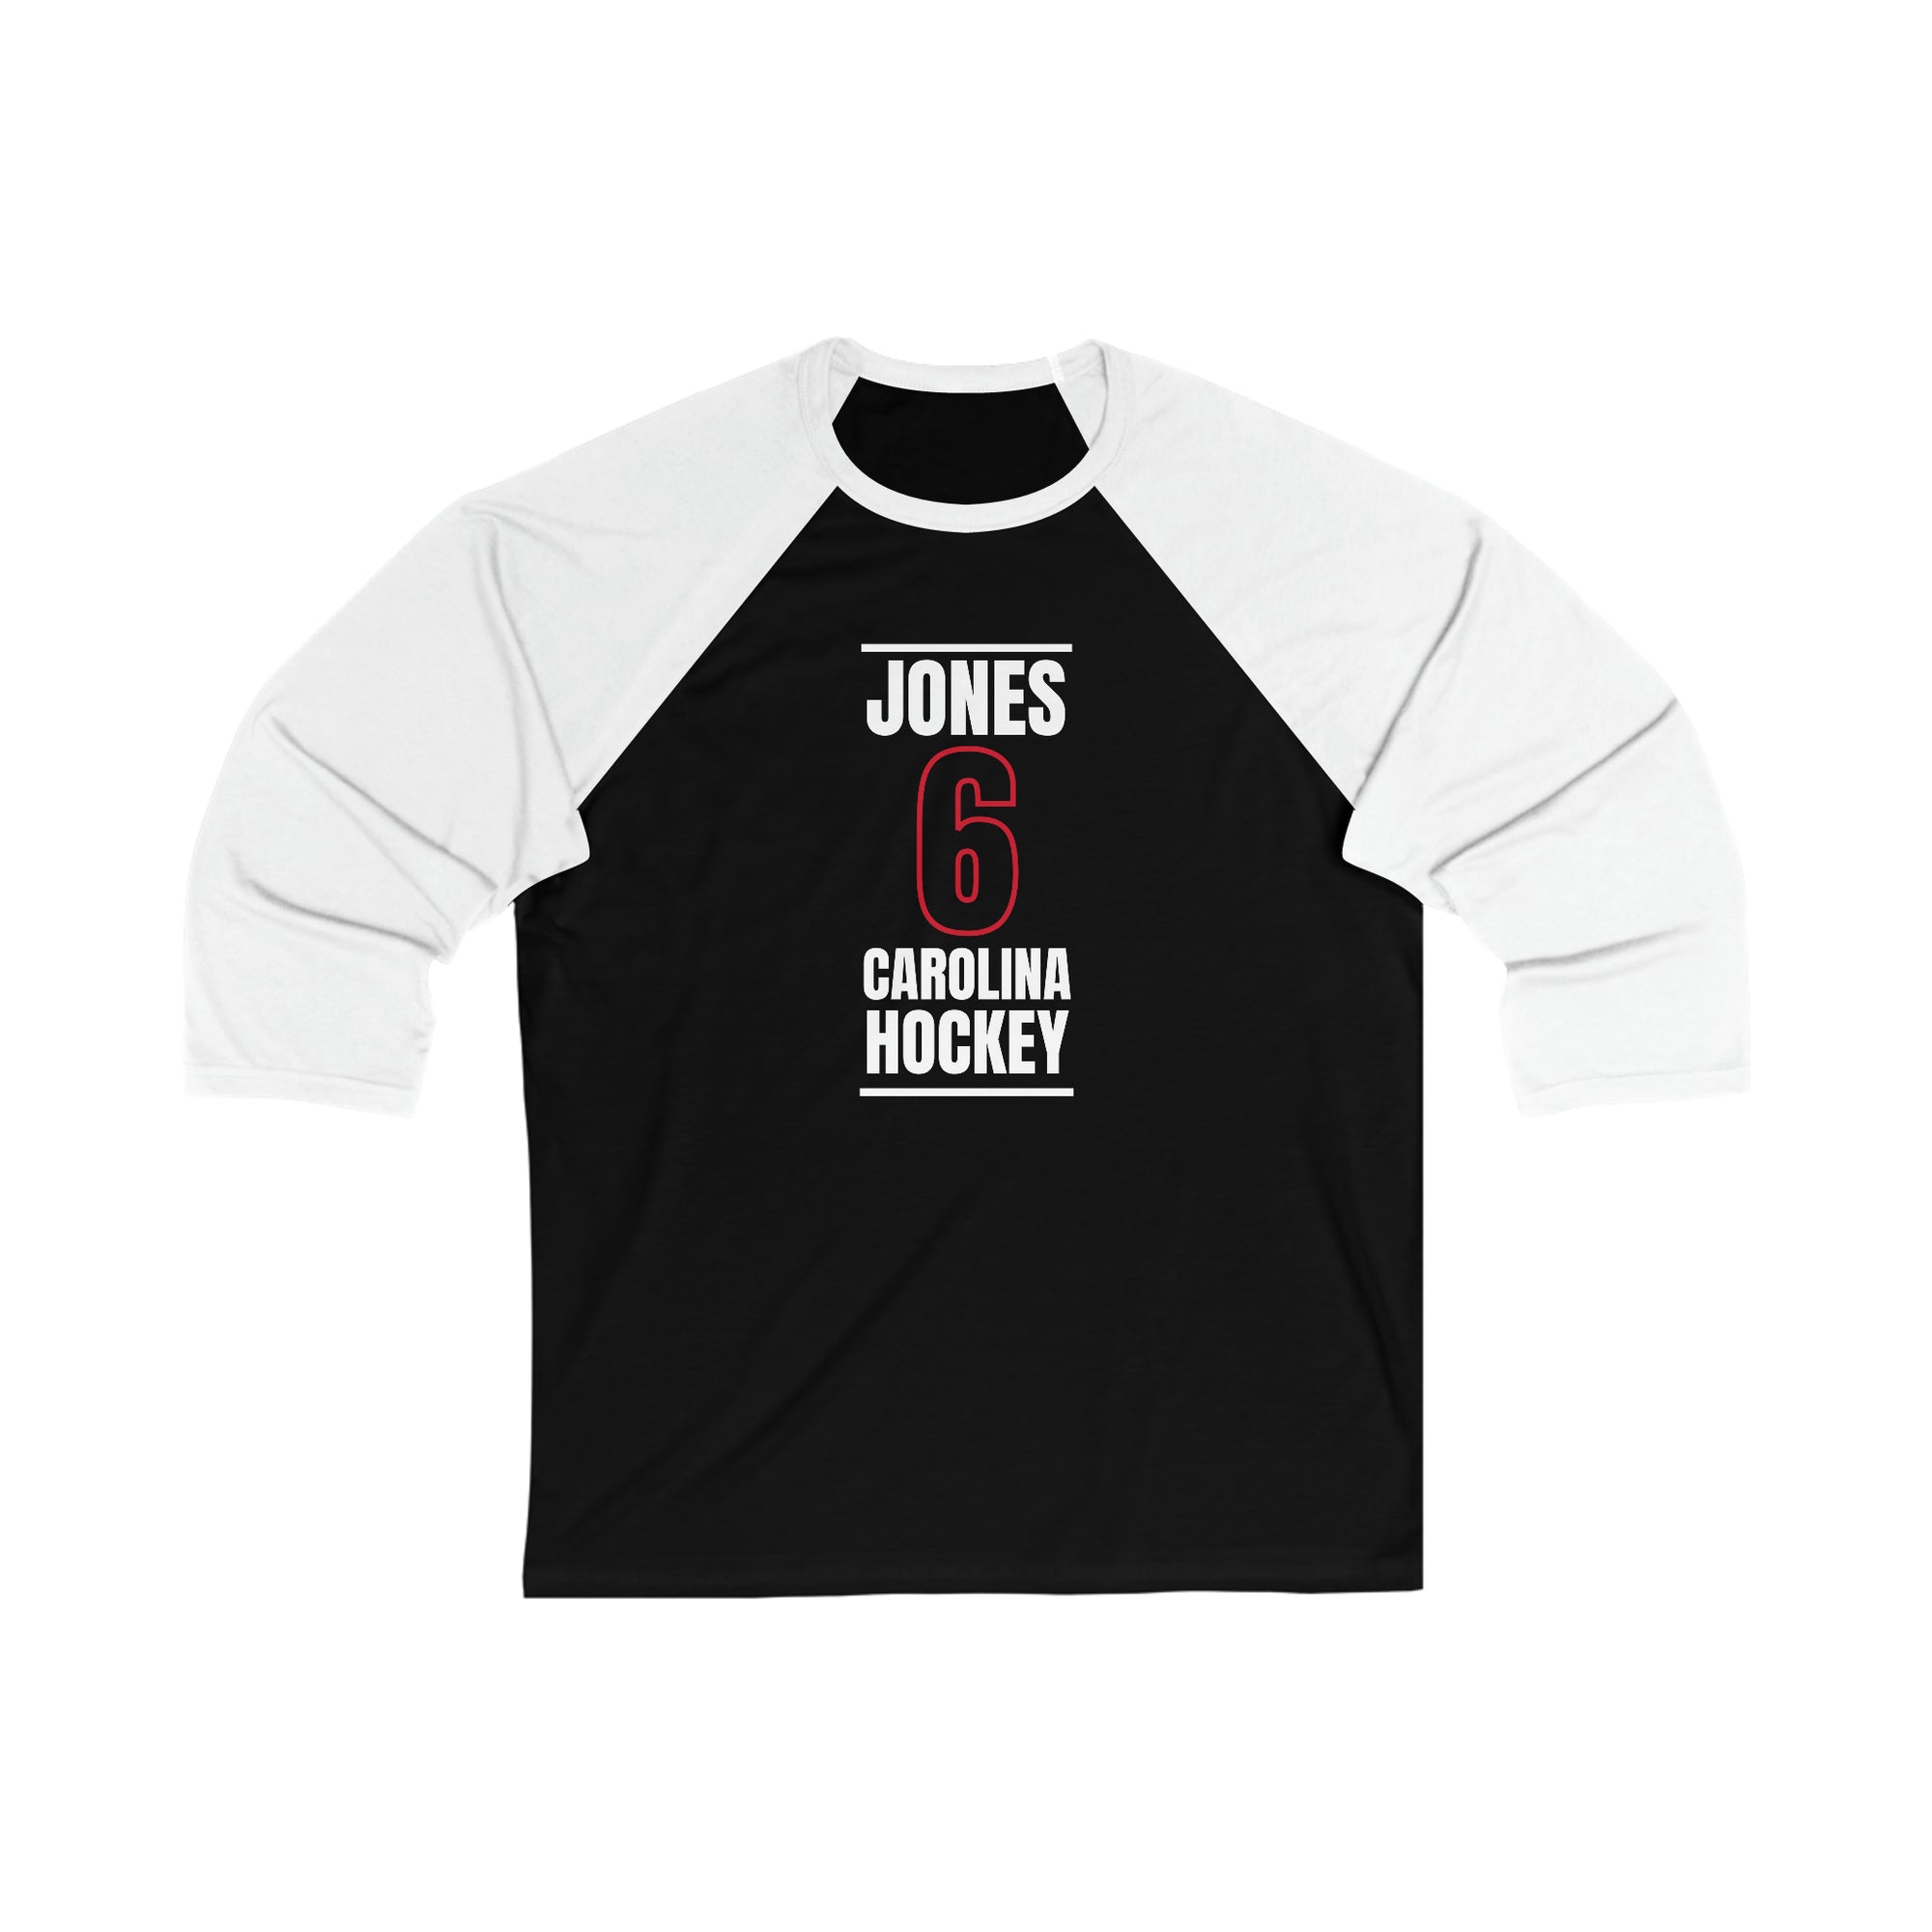 Jones 6 Carolina Hockey Black Vertical Design Unisex Tri-Blend 3/4 Sleeve Raglan Baseball Shirt